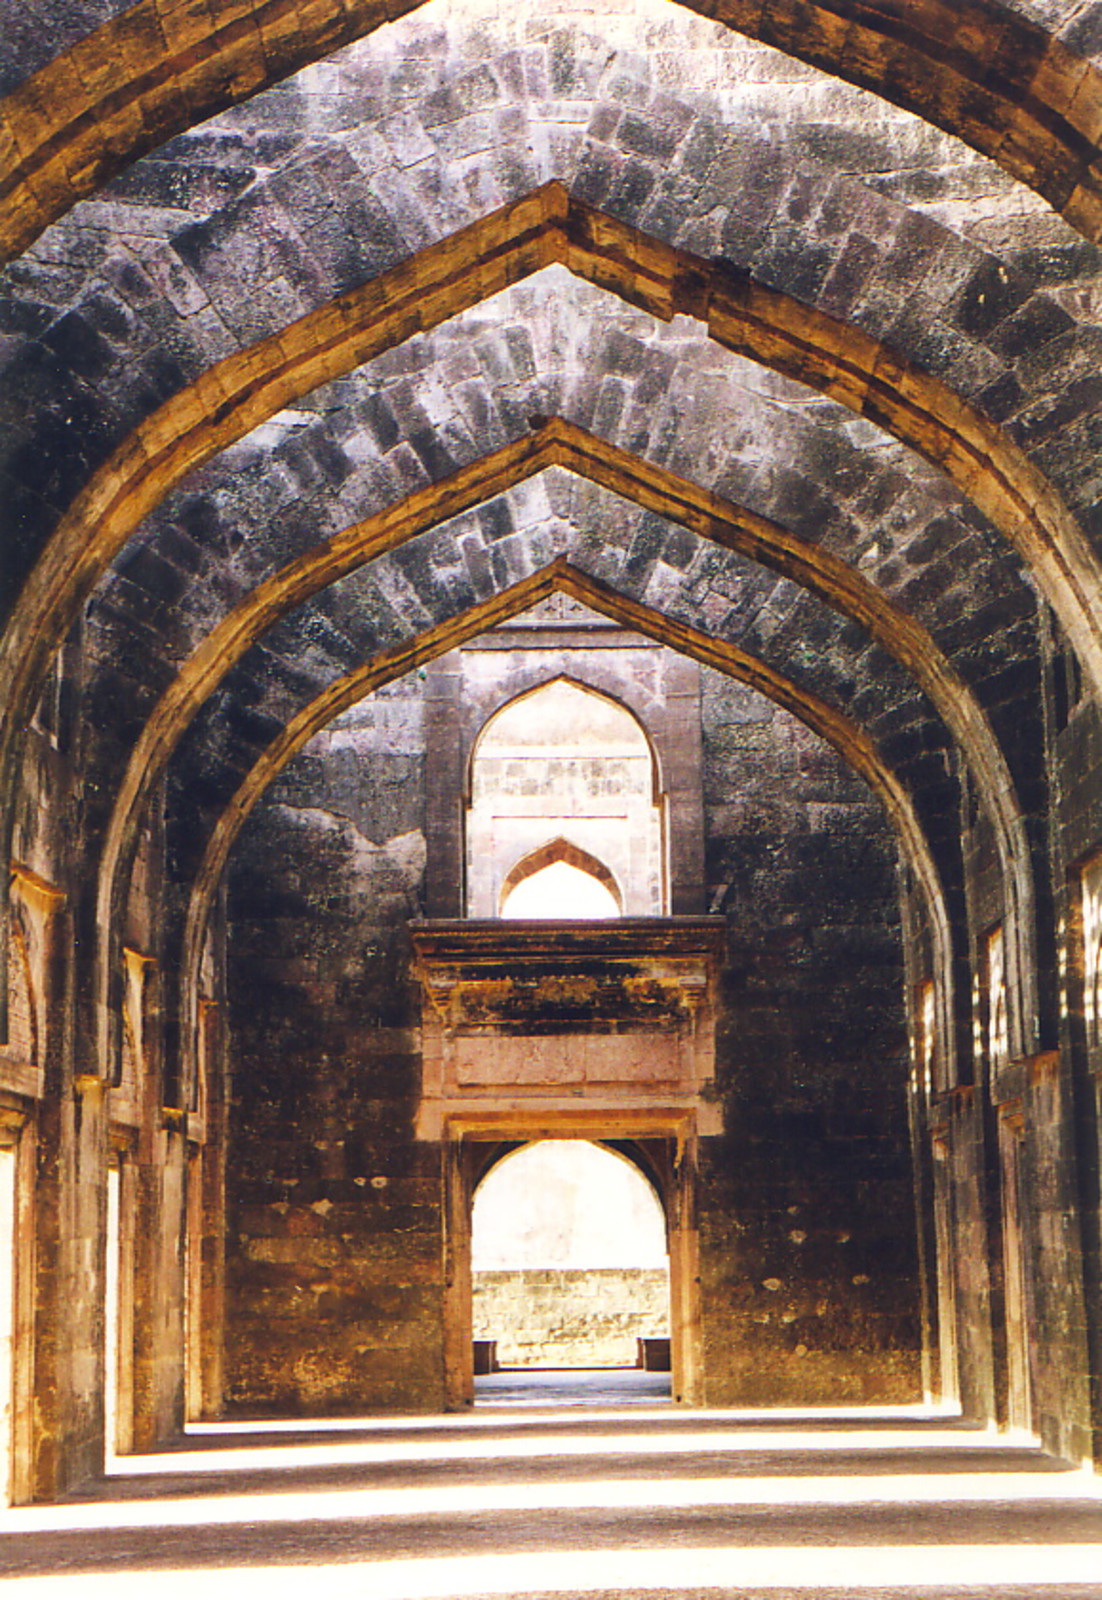 The Hindola Mahal